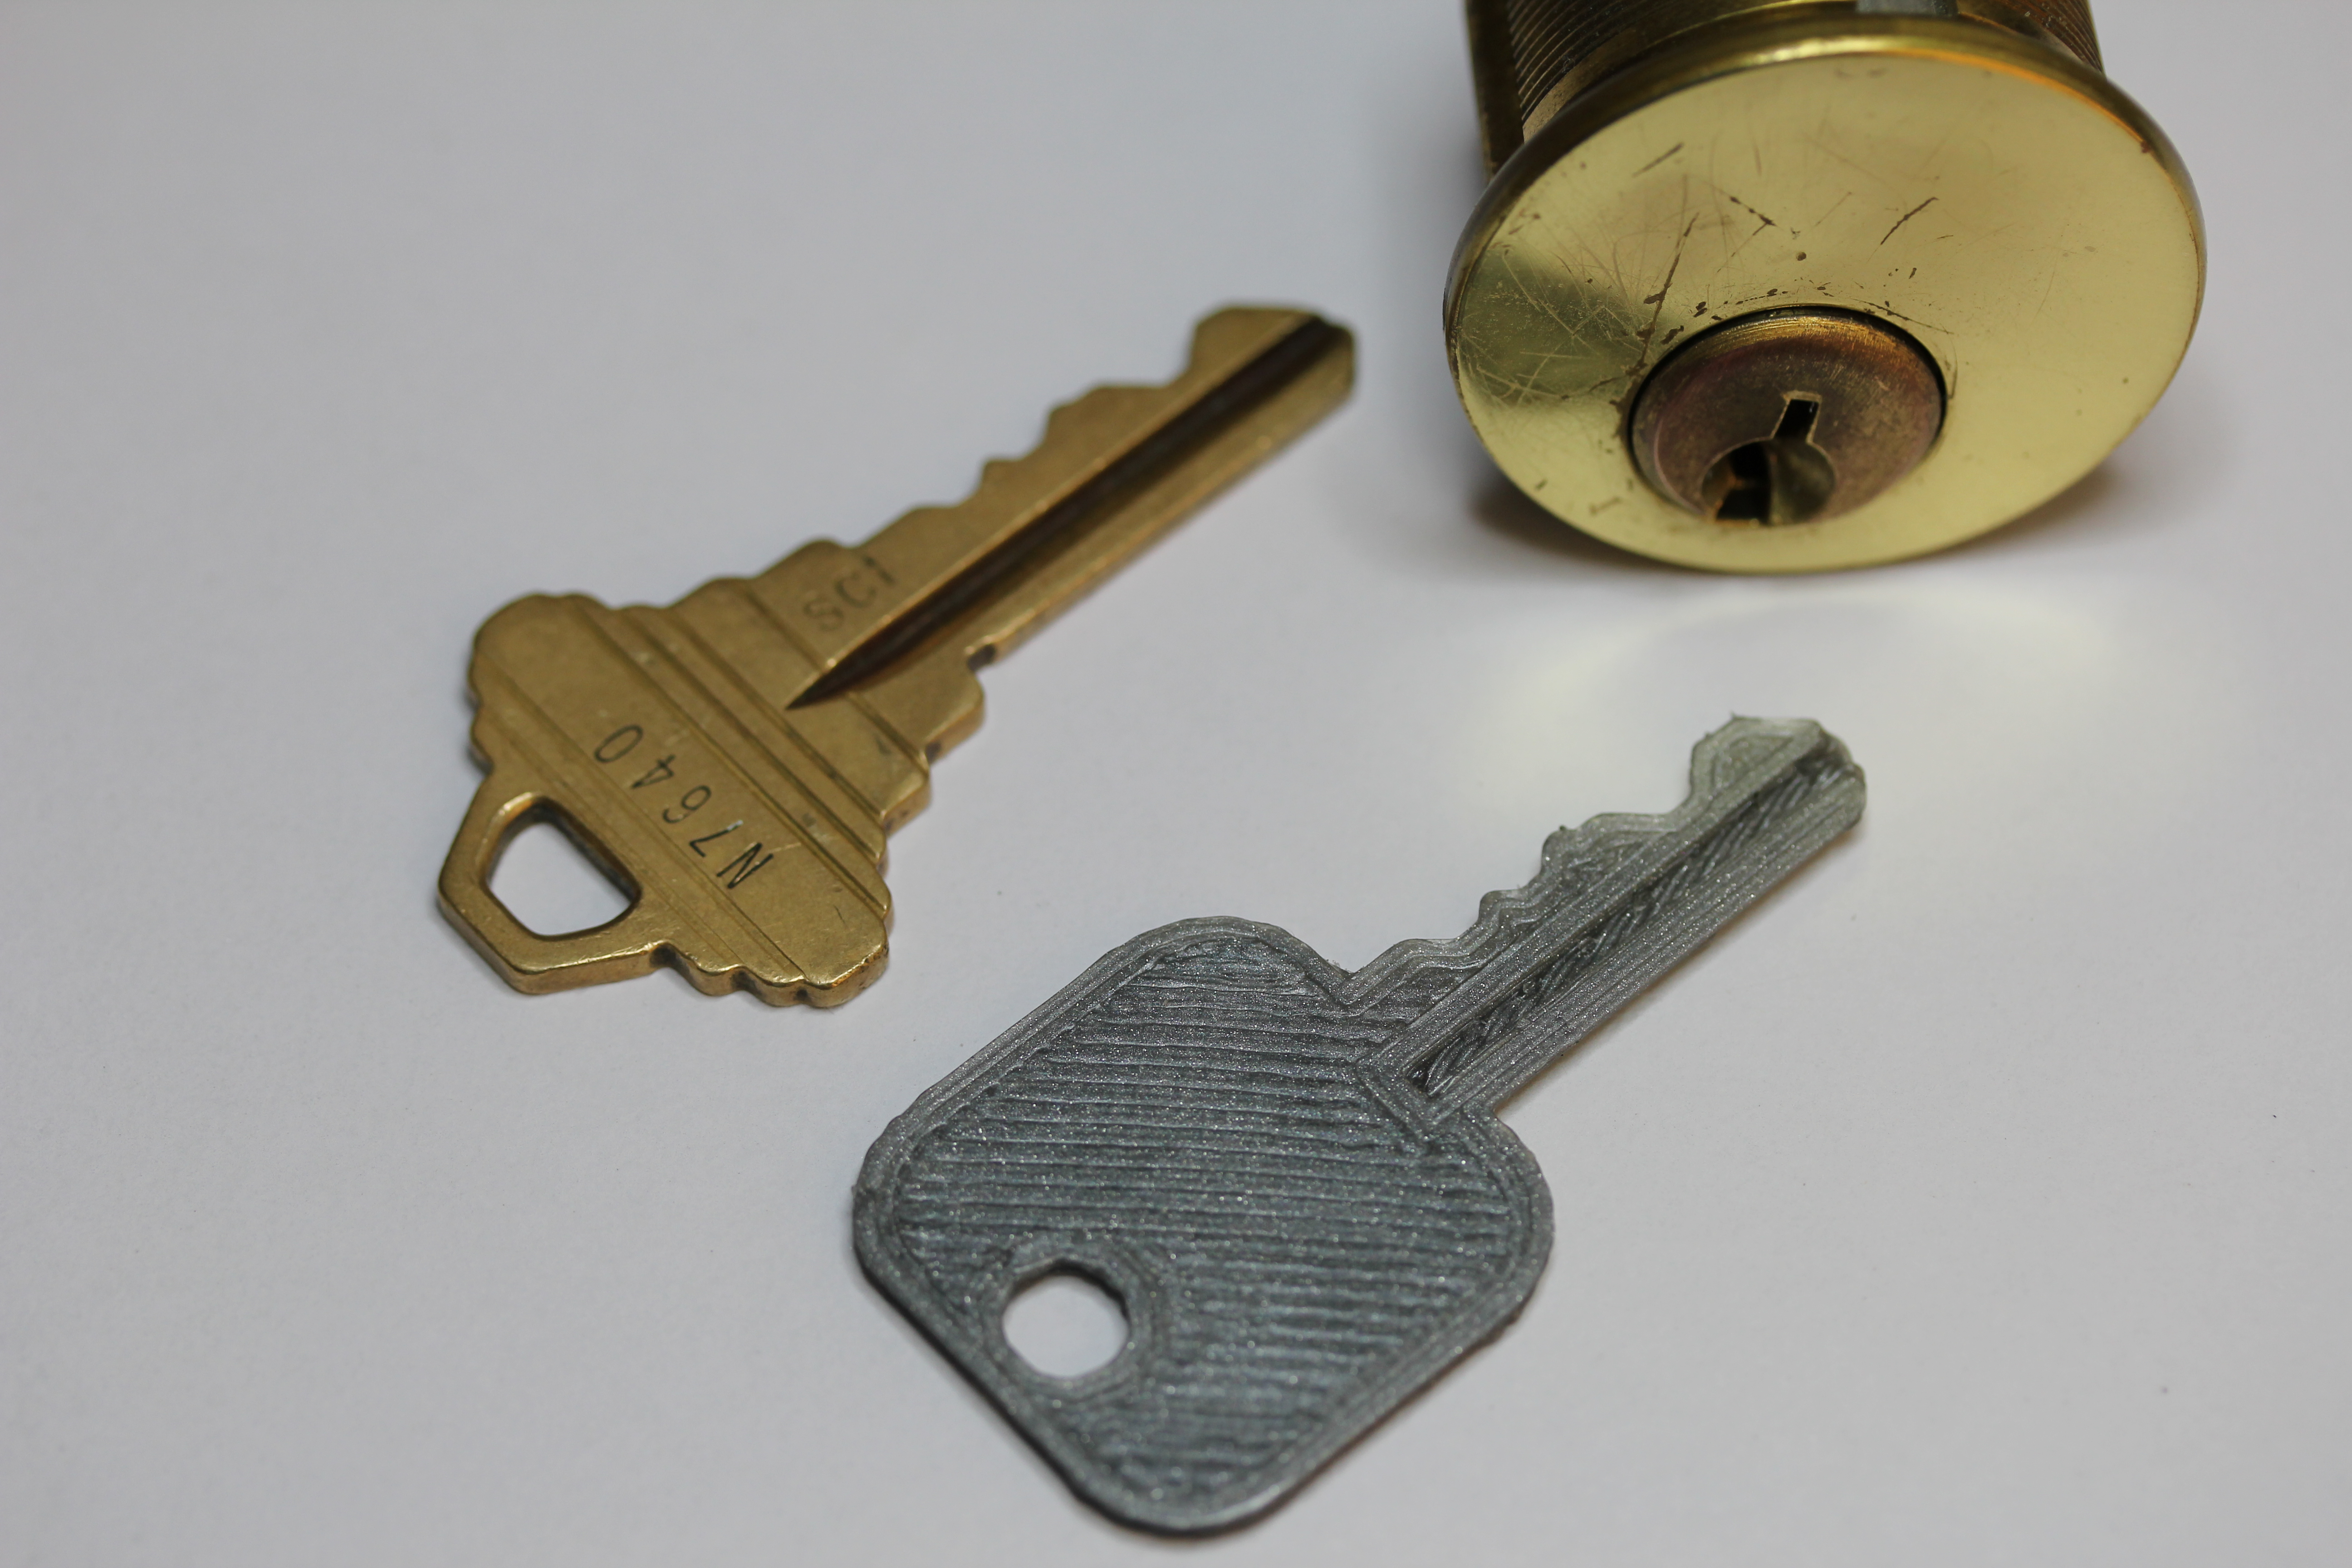 Neuropathy betrayal girl Physical Keygen: Duplicating House Keys on a 3D Printer | eclecticc